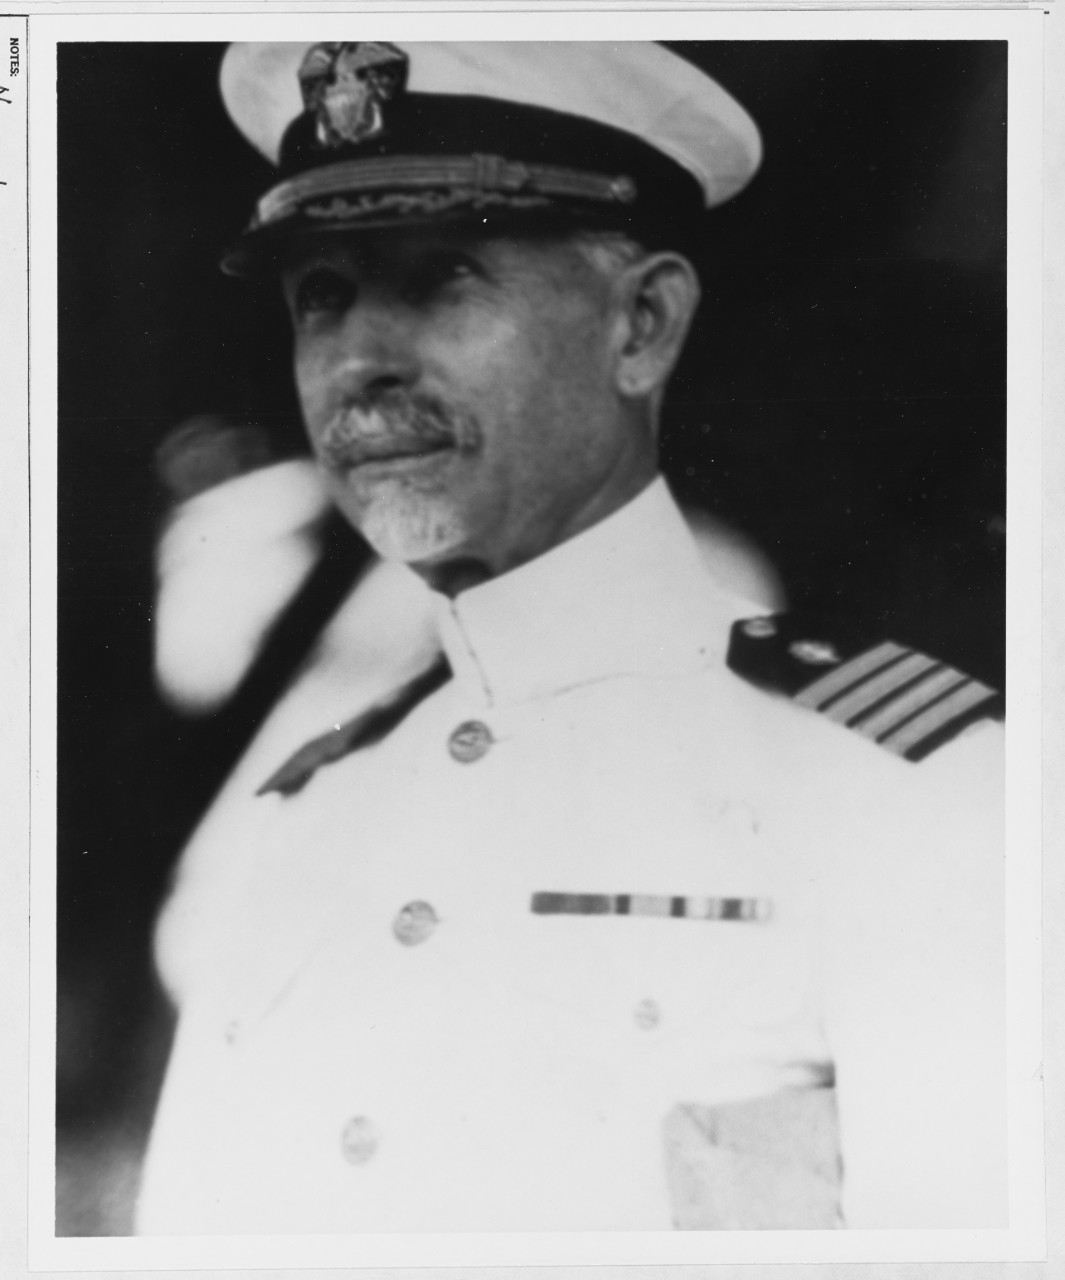 Captain Adrian R. Alfred, USN